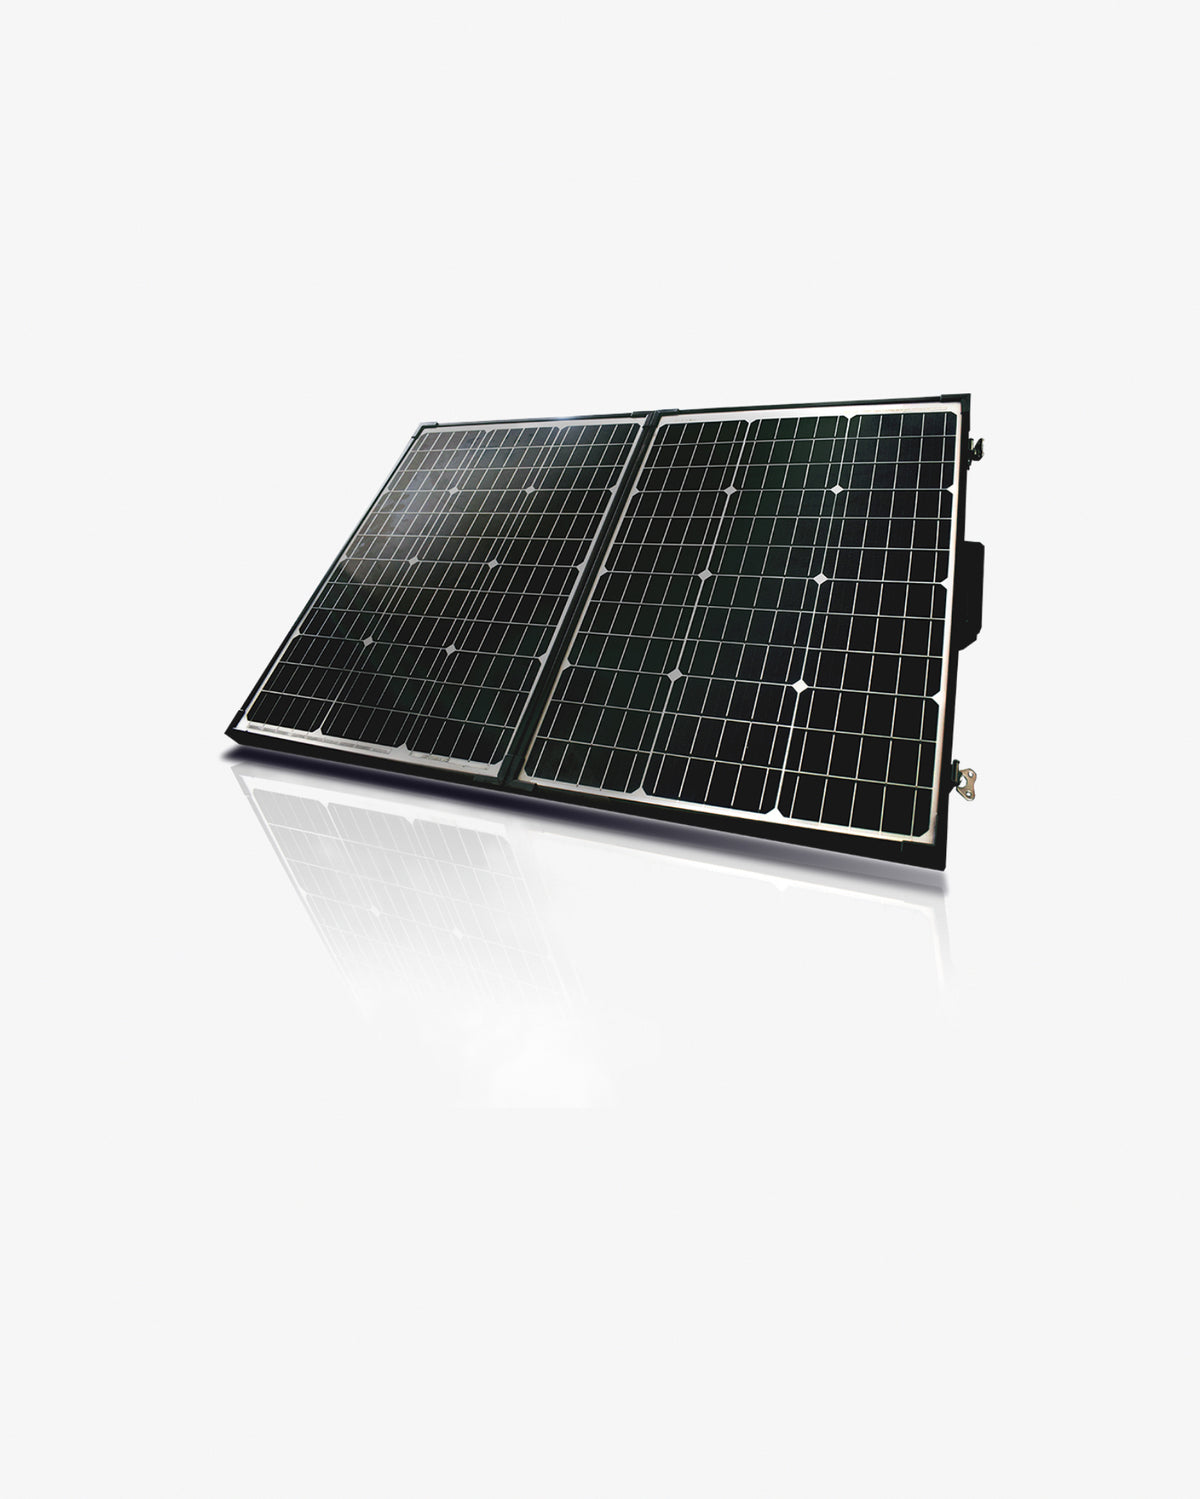 110 Watt Portable Solar Panel Kit